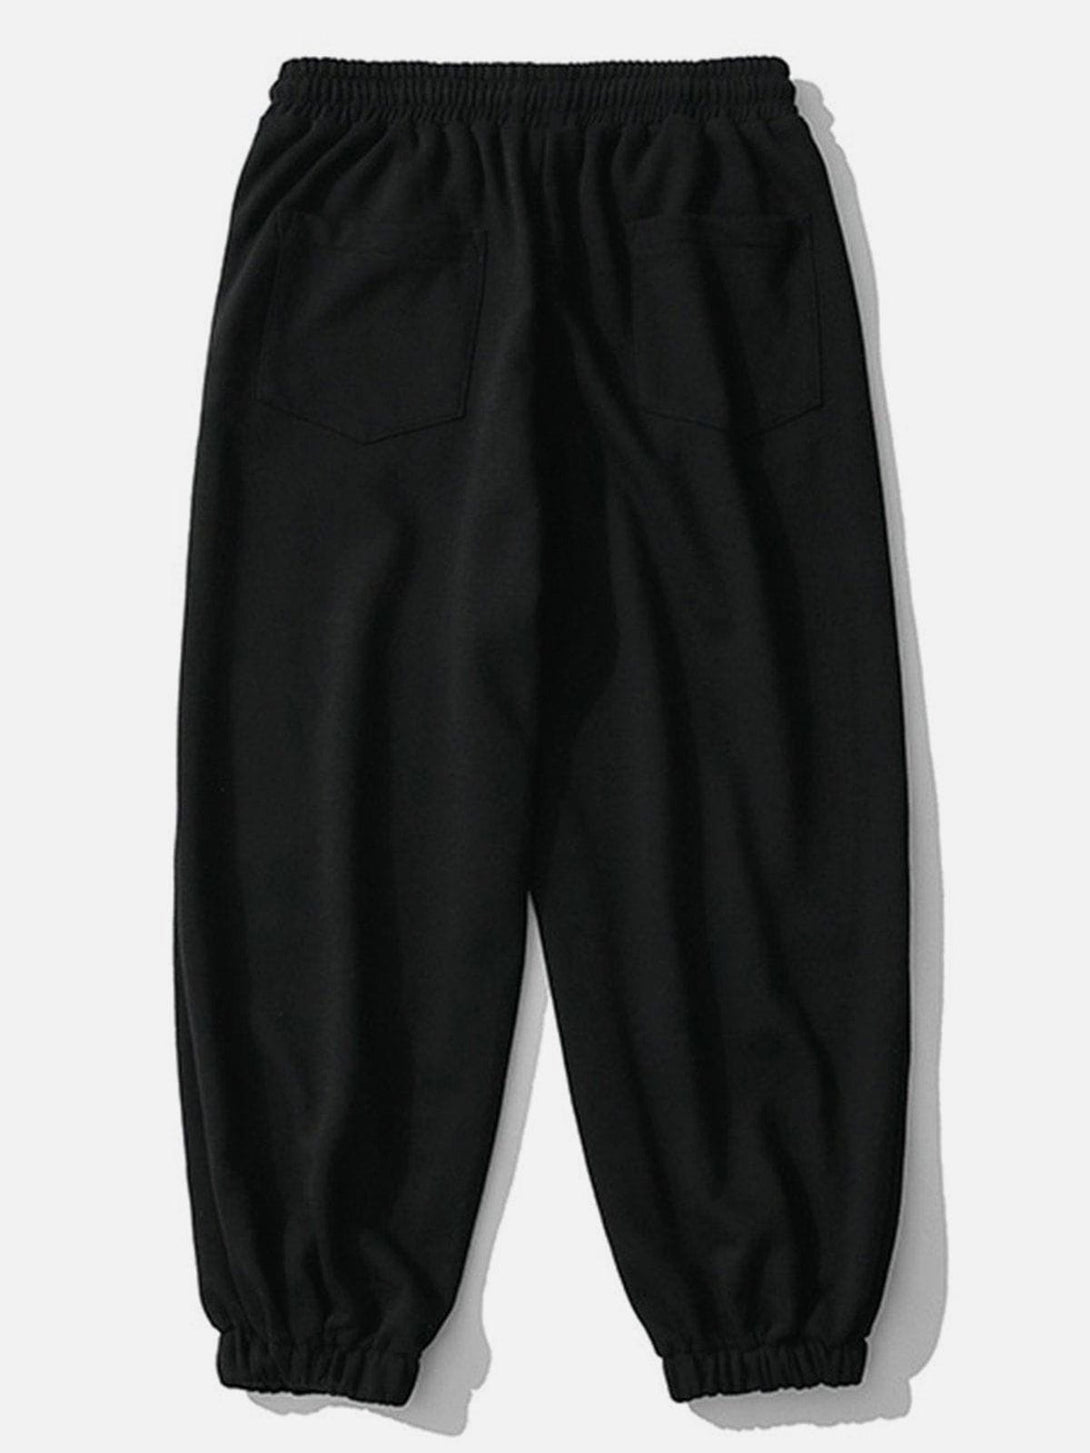 Majesda® - Patch Panel Track Pants outfit ideas streetwear fashion